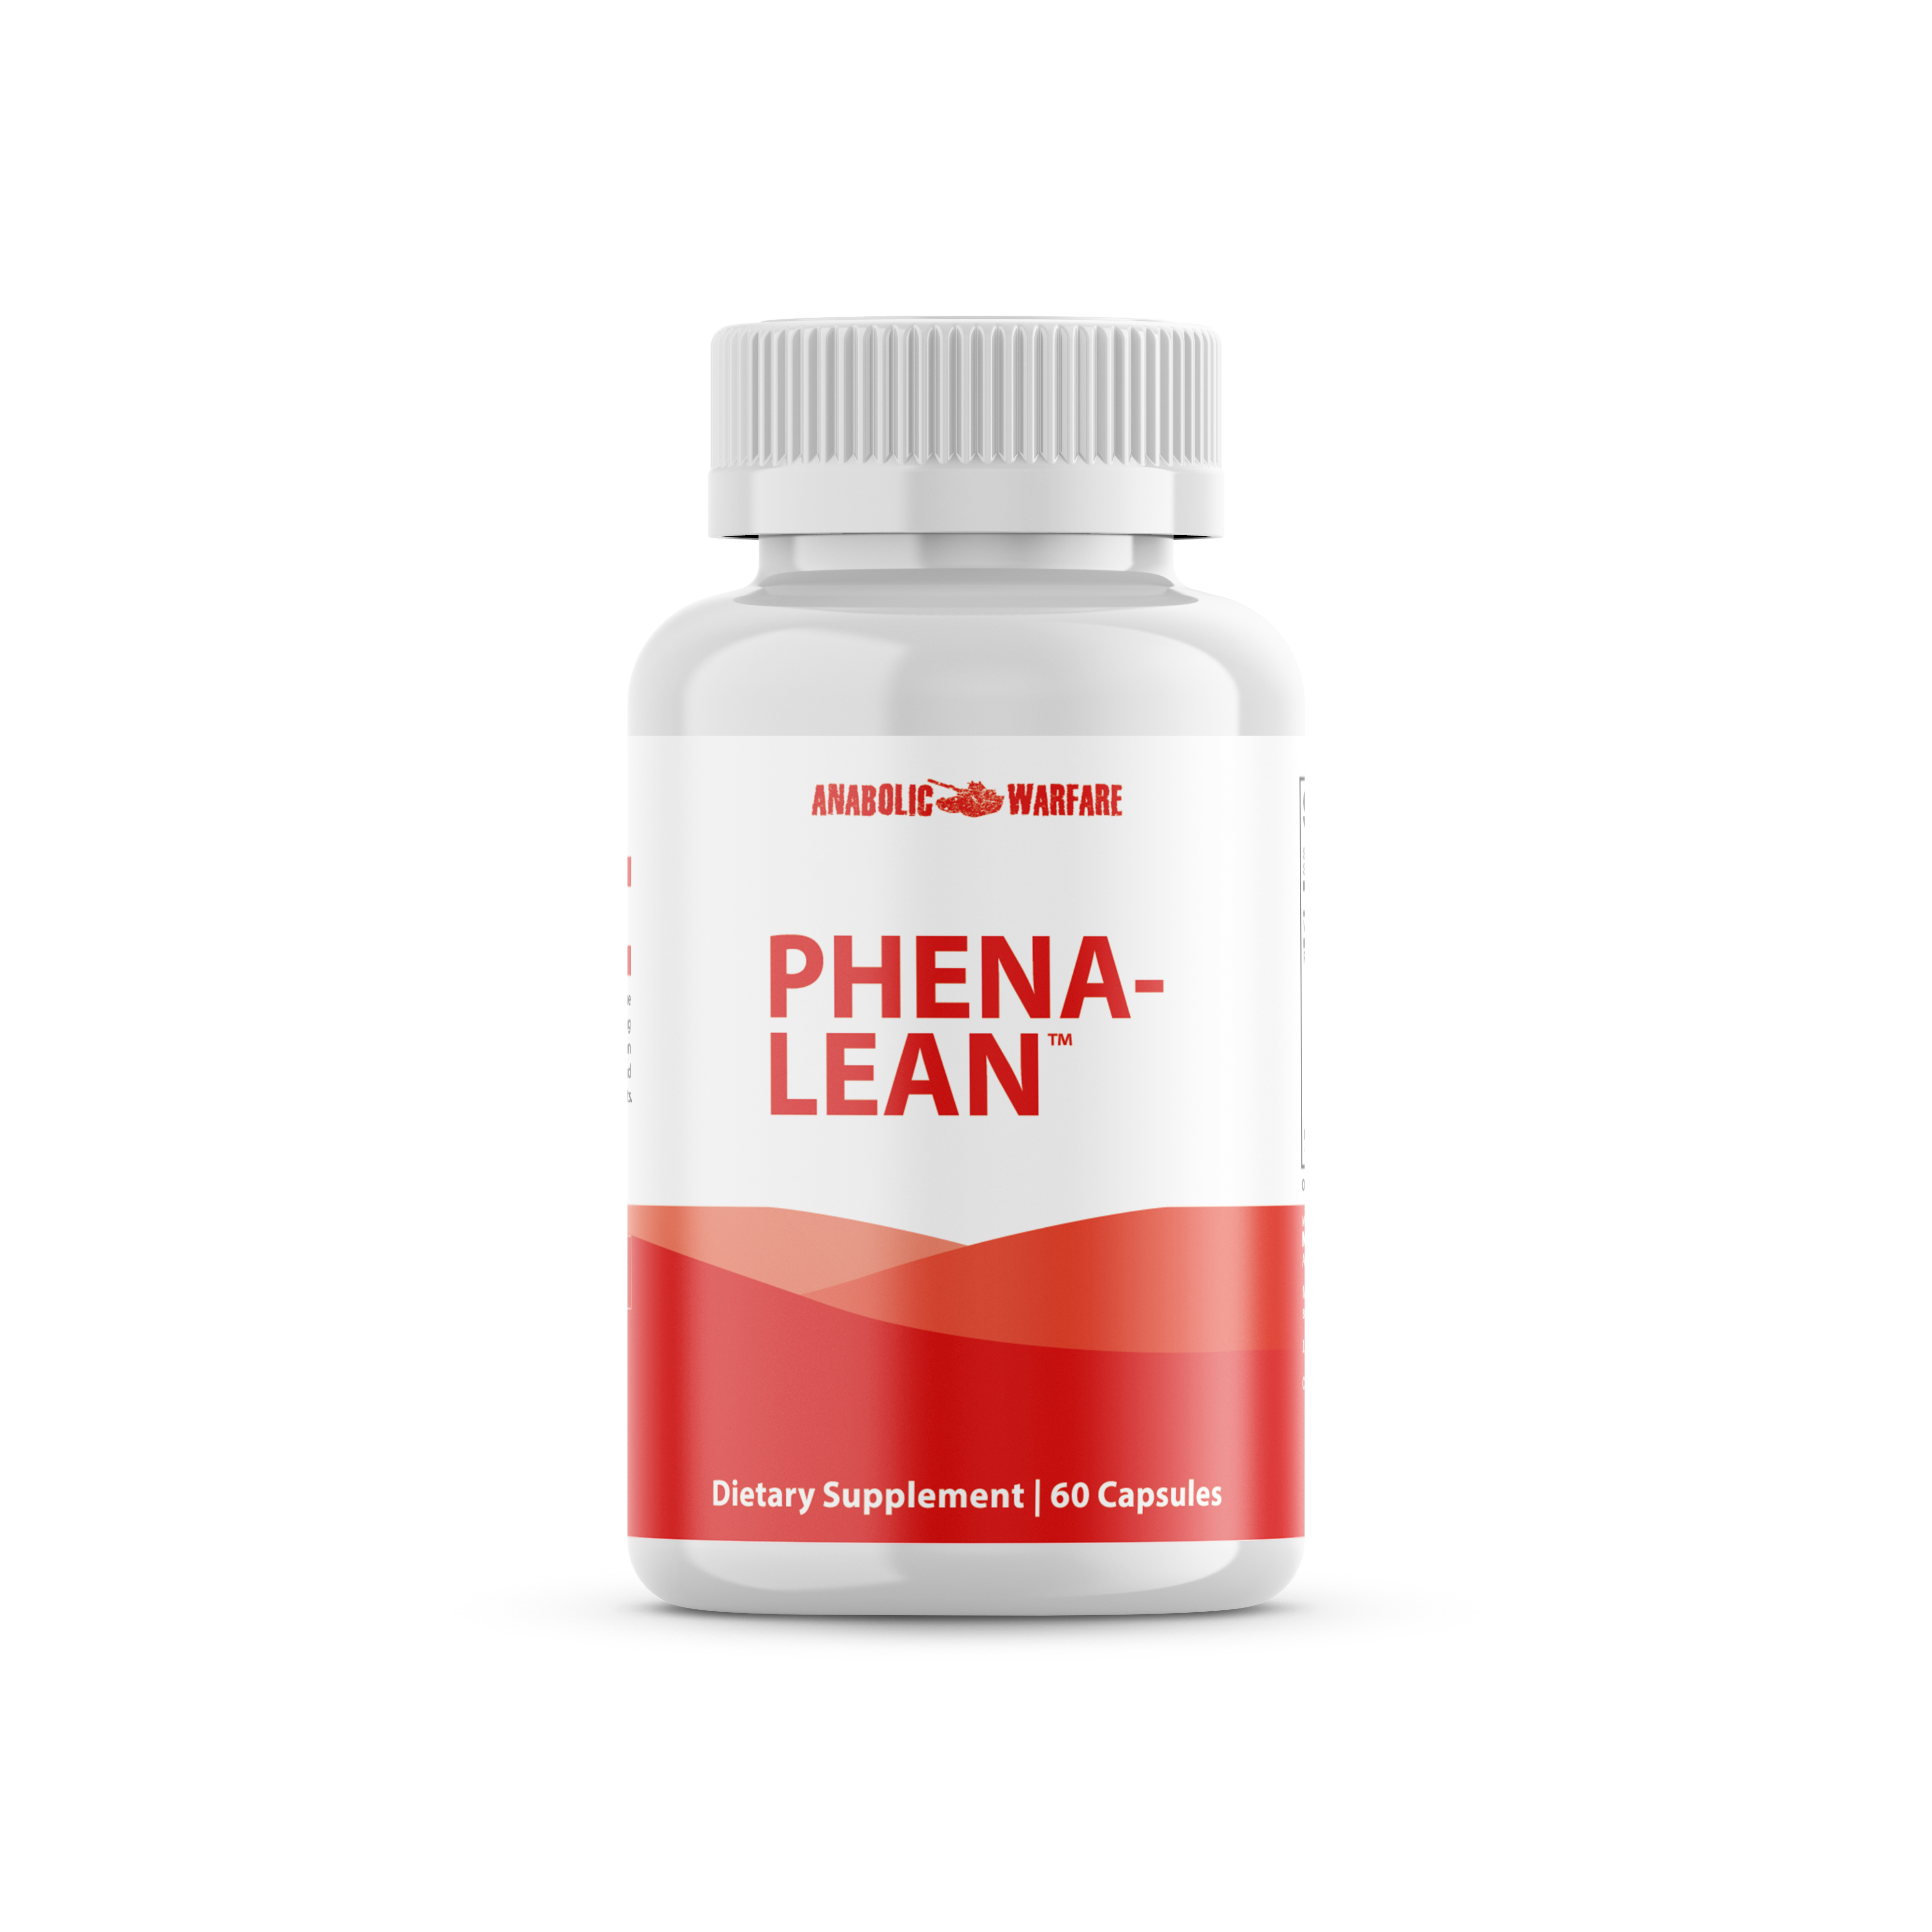 Image of Phena-Lean 1 11 1 